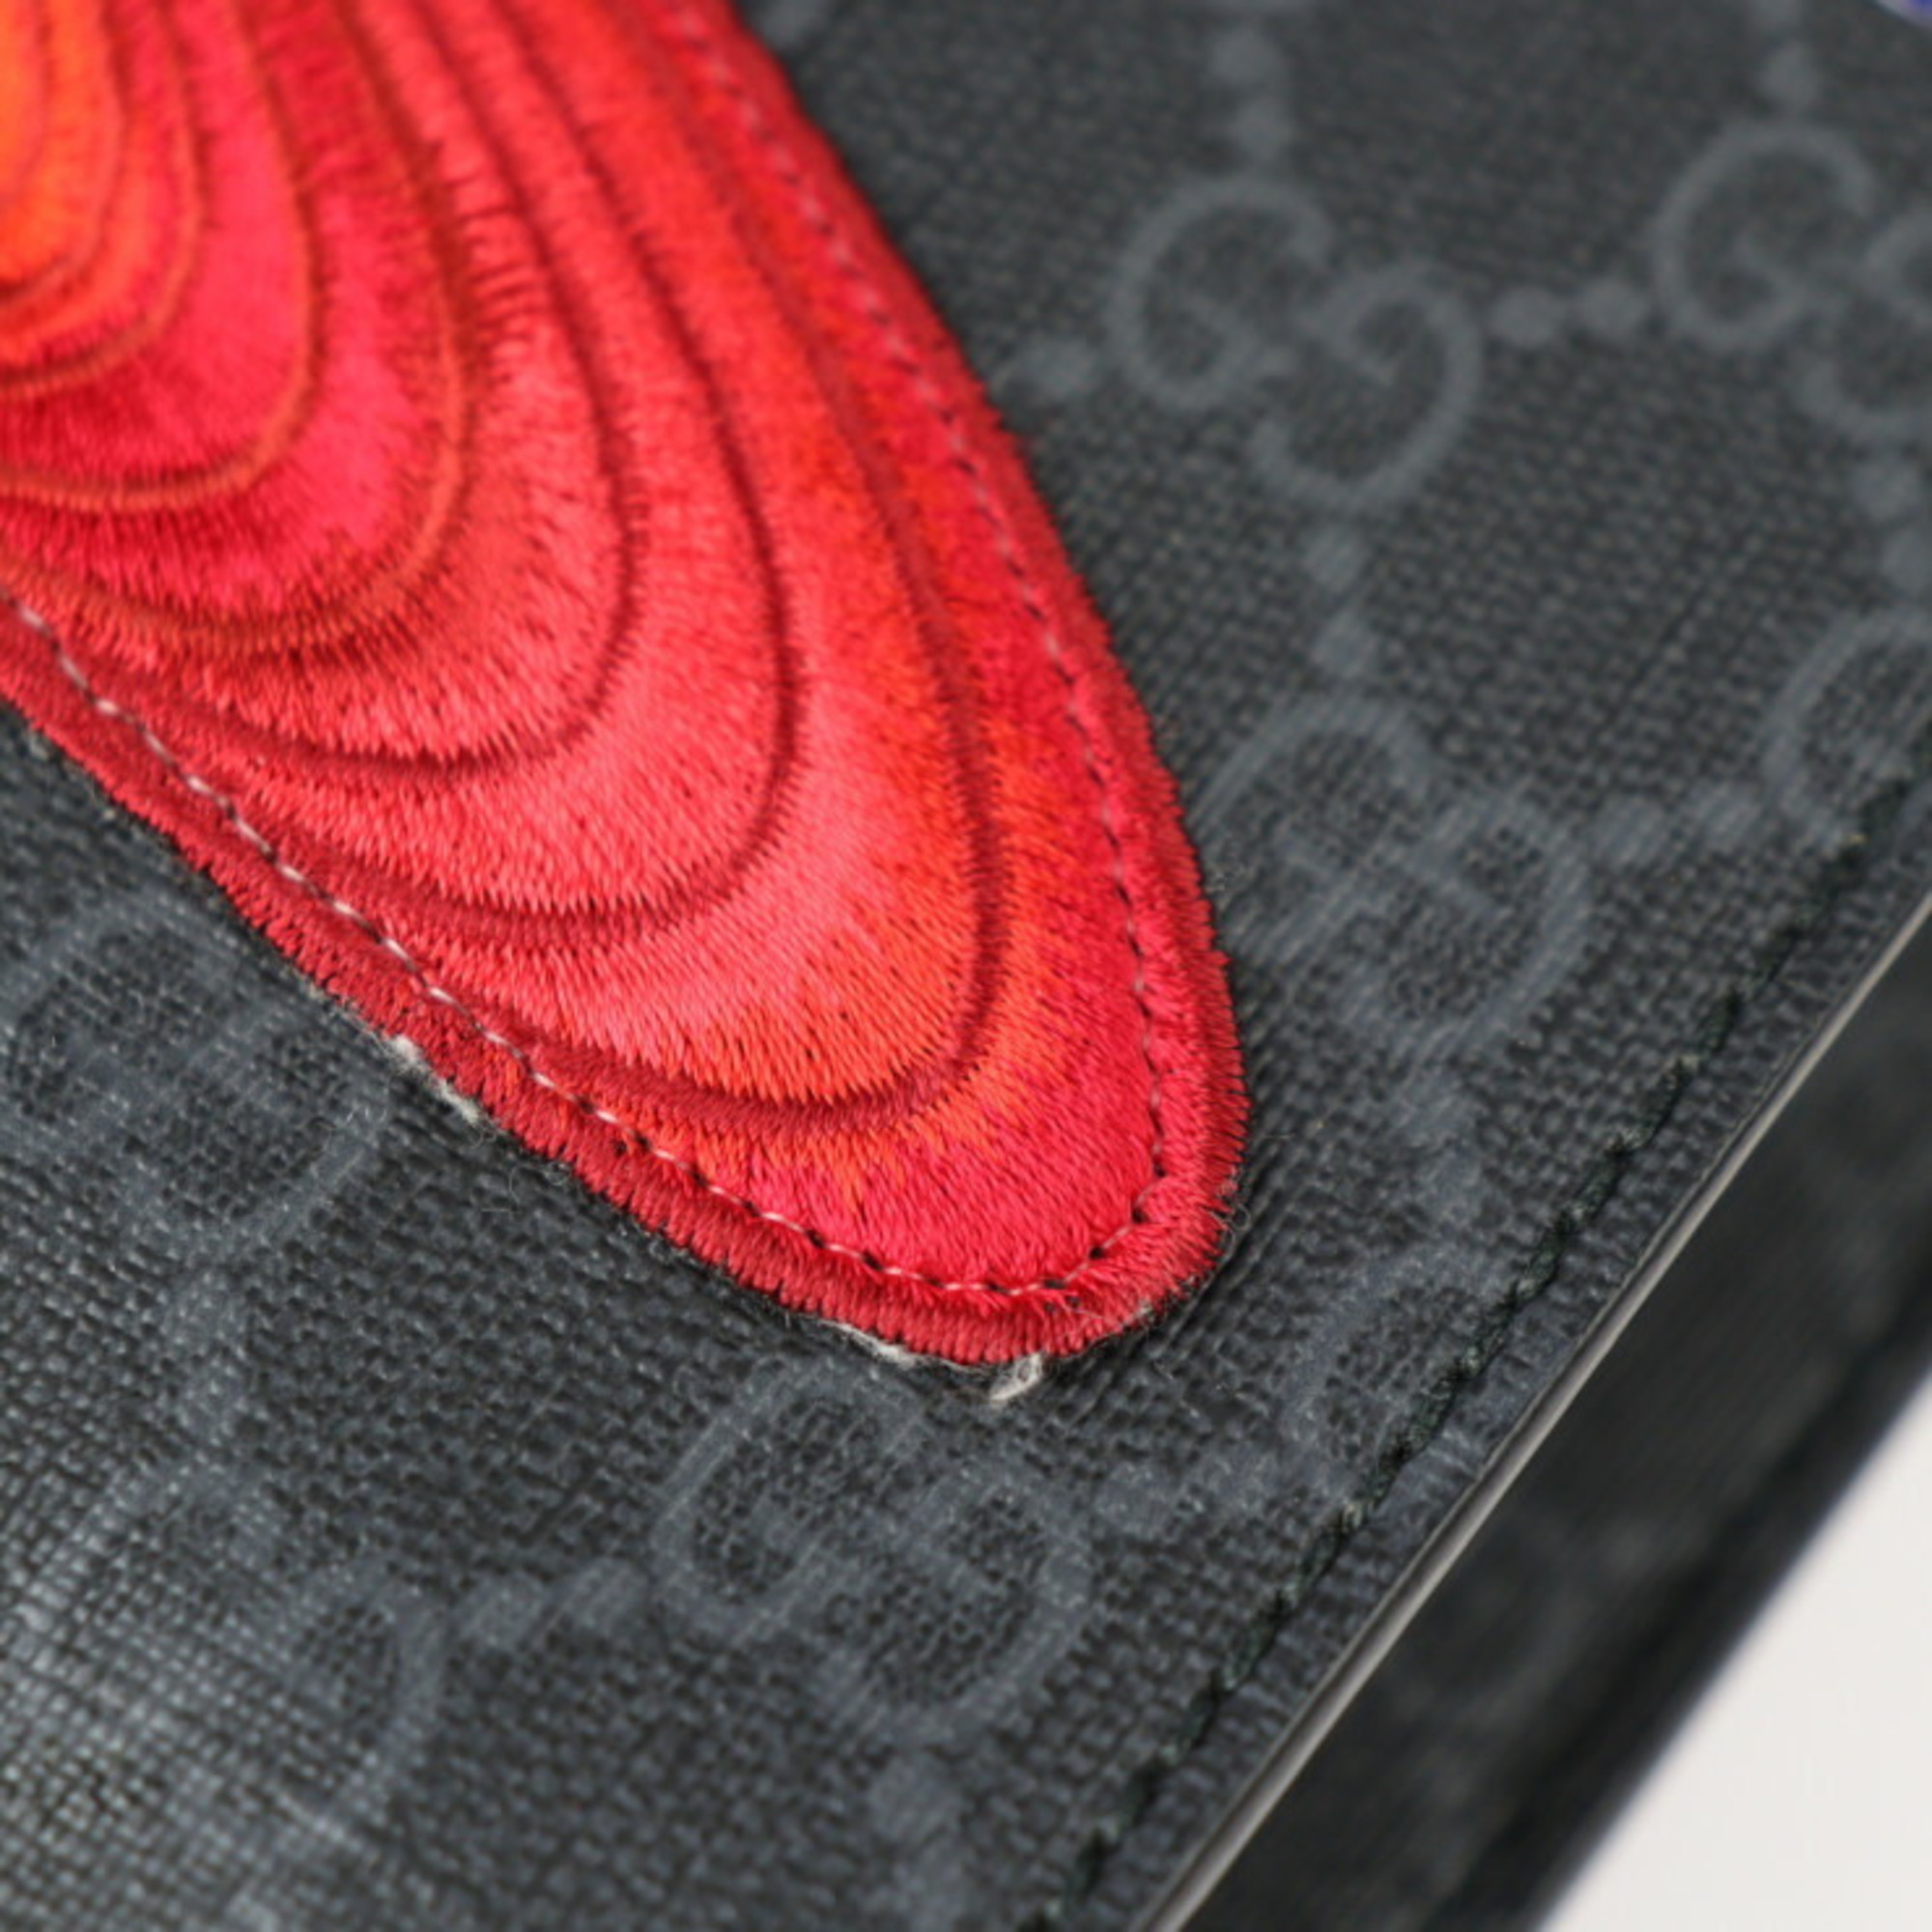 GUCCI Gucci GG Supreme Tote Bag 495559 PVC Leather Gray Multicolor 2WAY Shoulder Patch